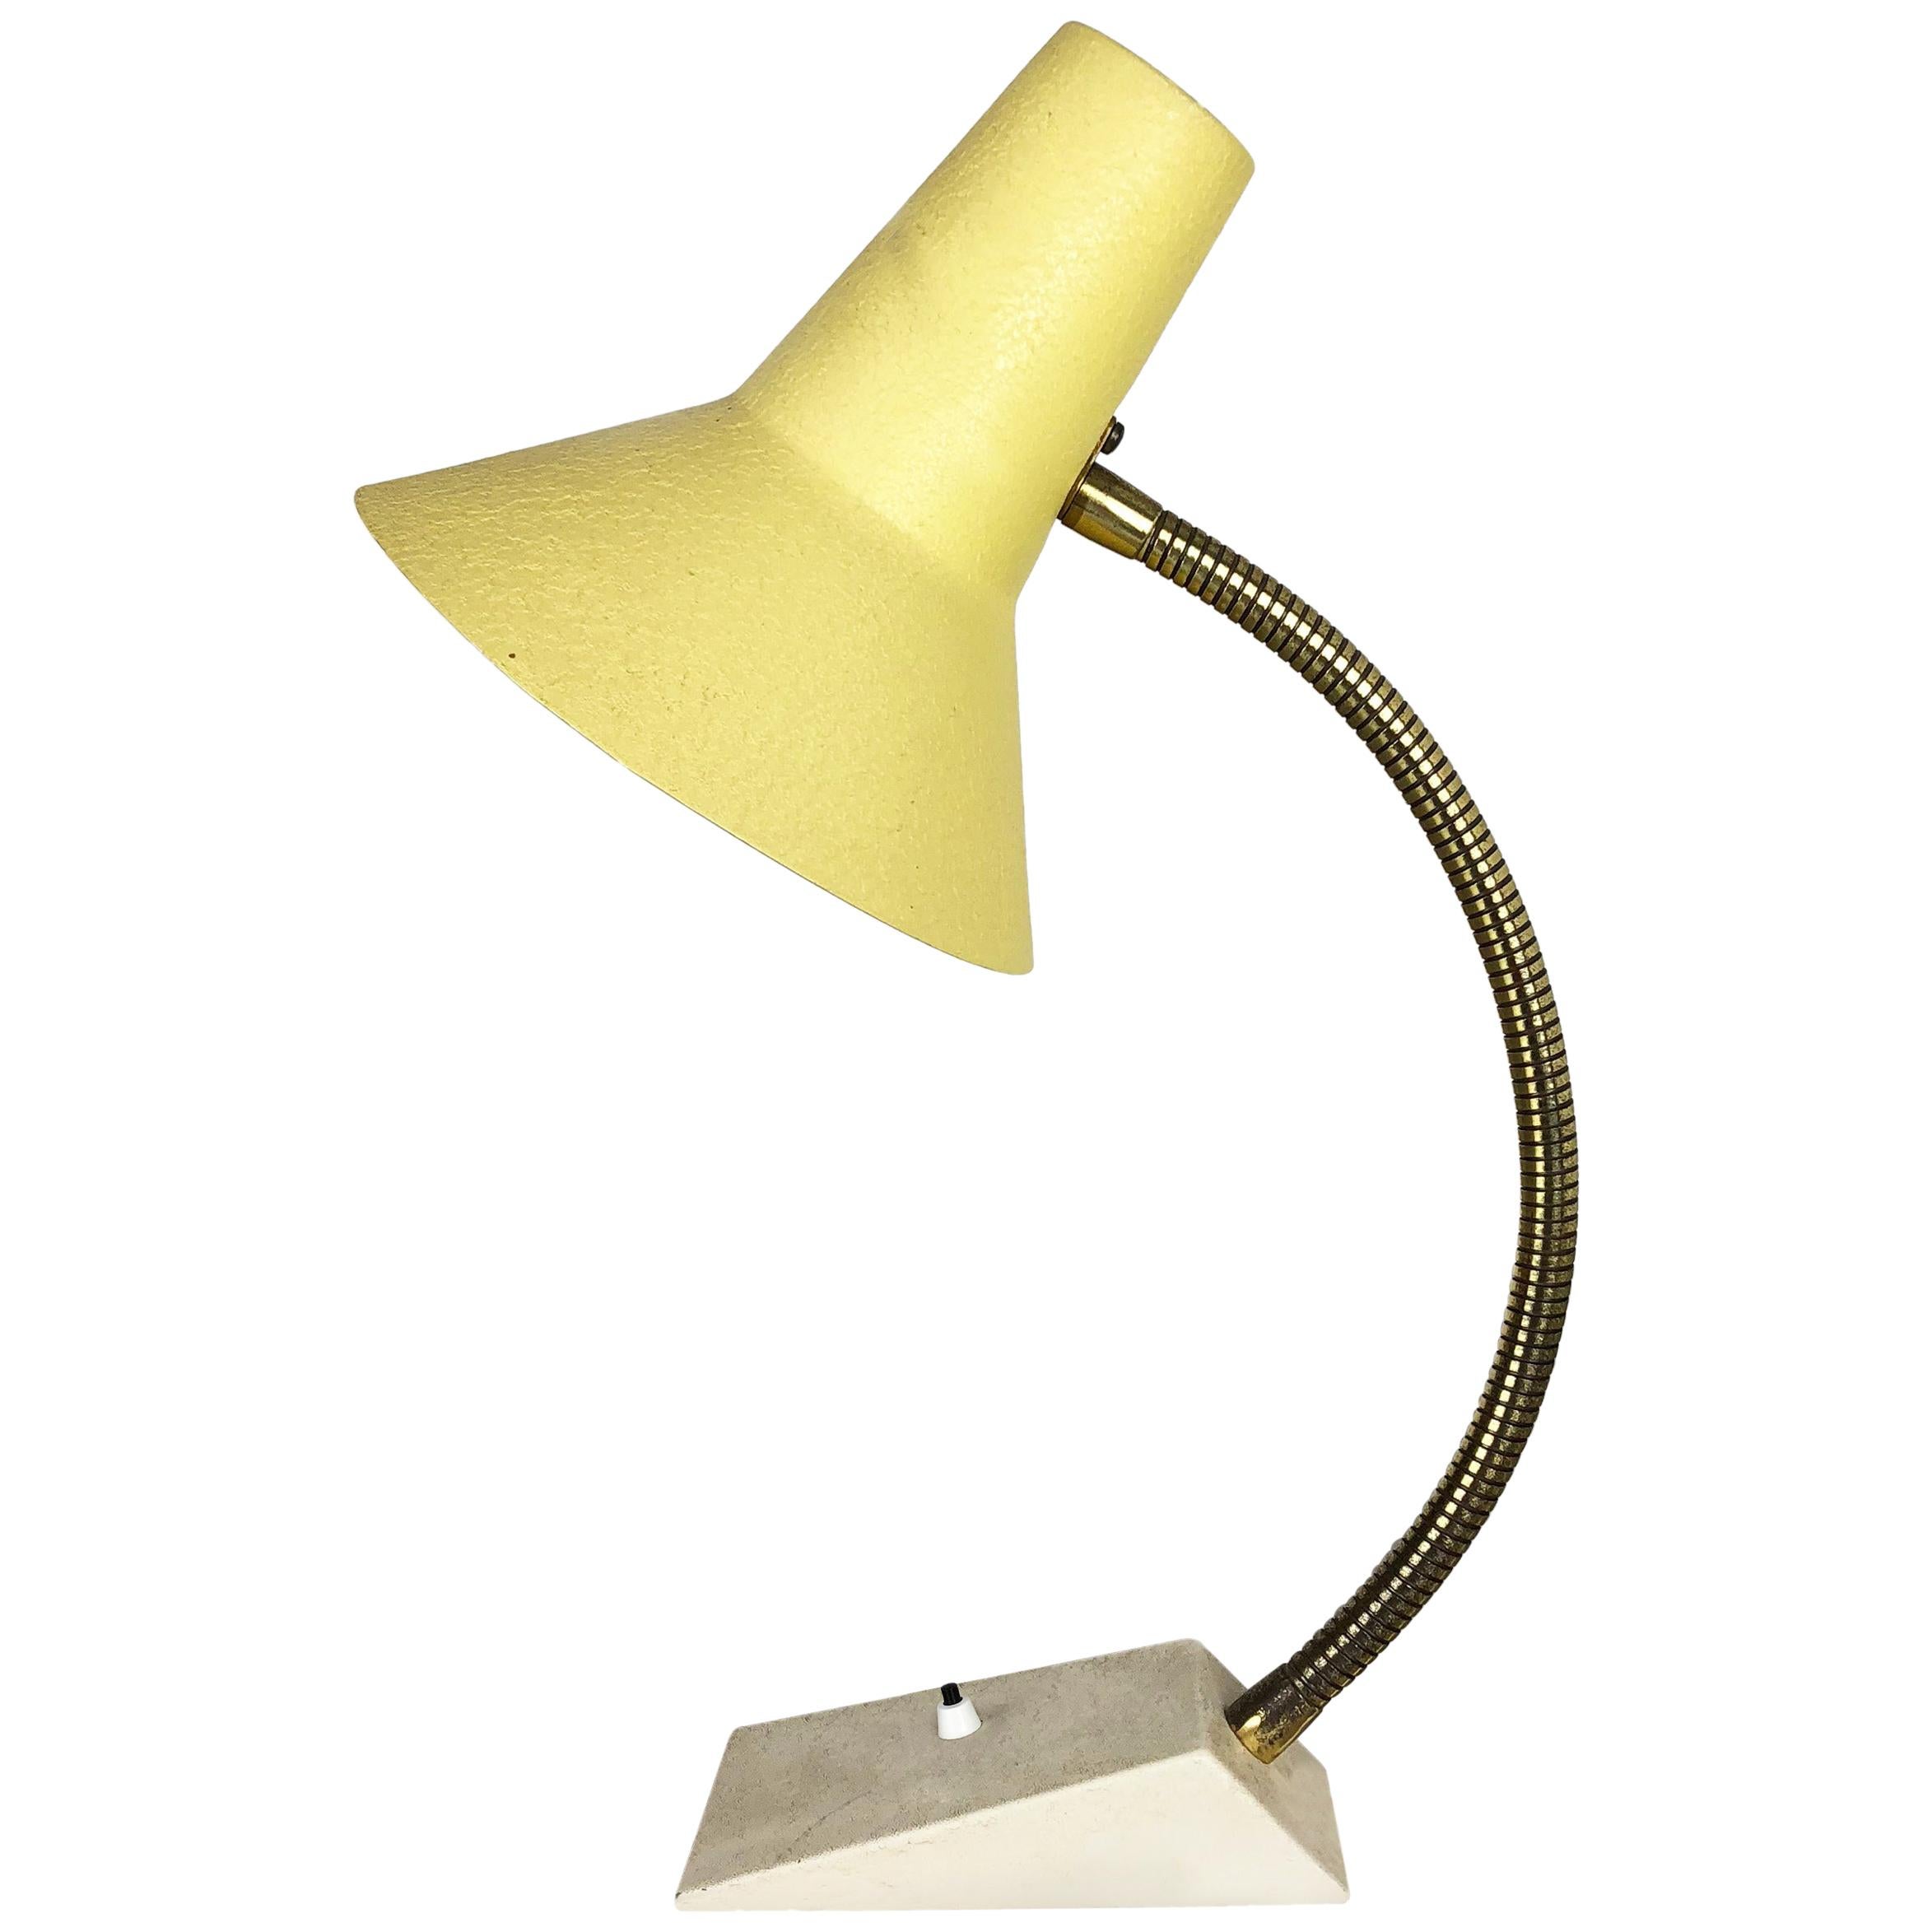 Original Modernist 1960s Brass Metal Table Light Made by SIS Lights, Germany